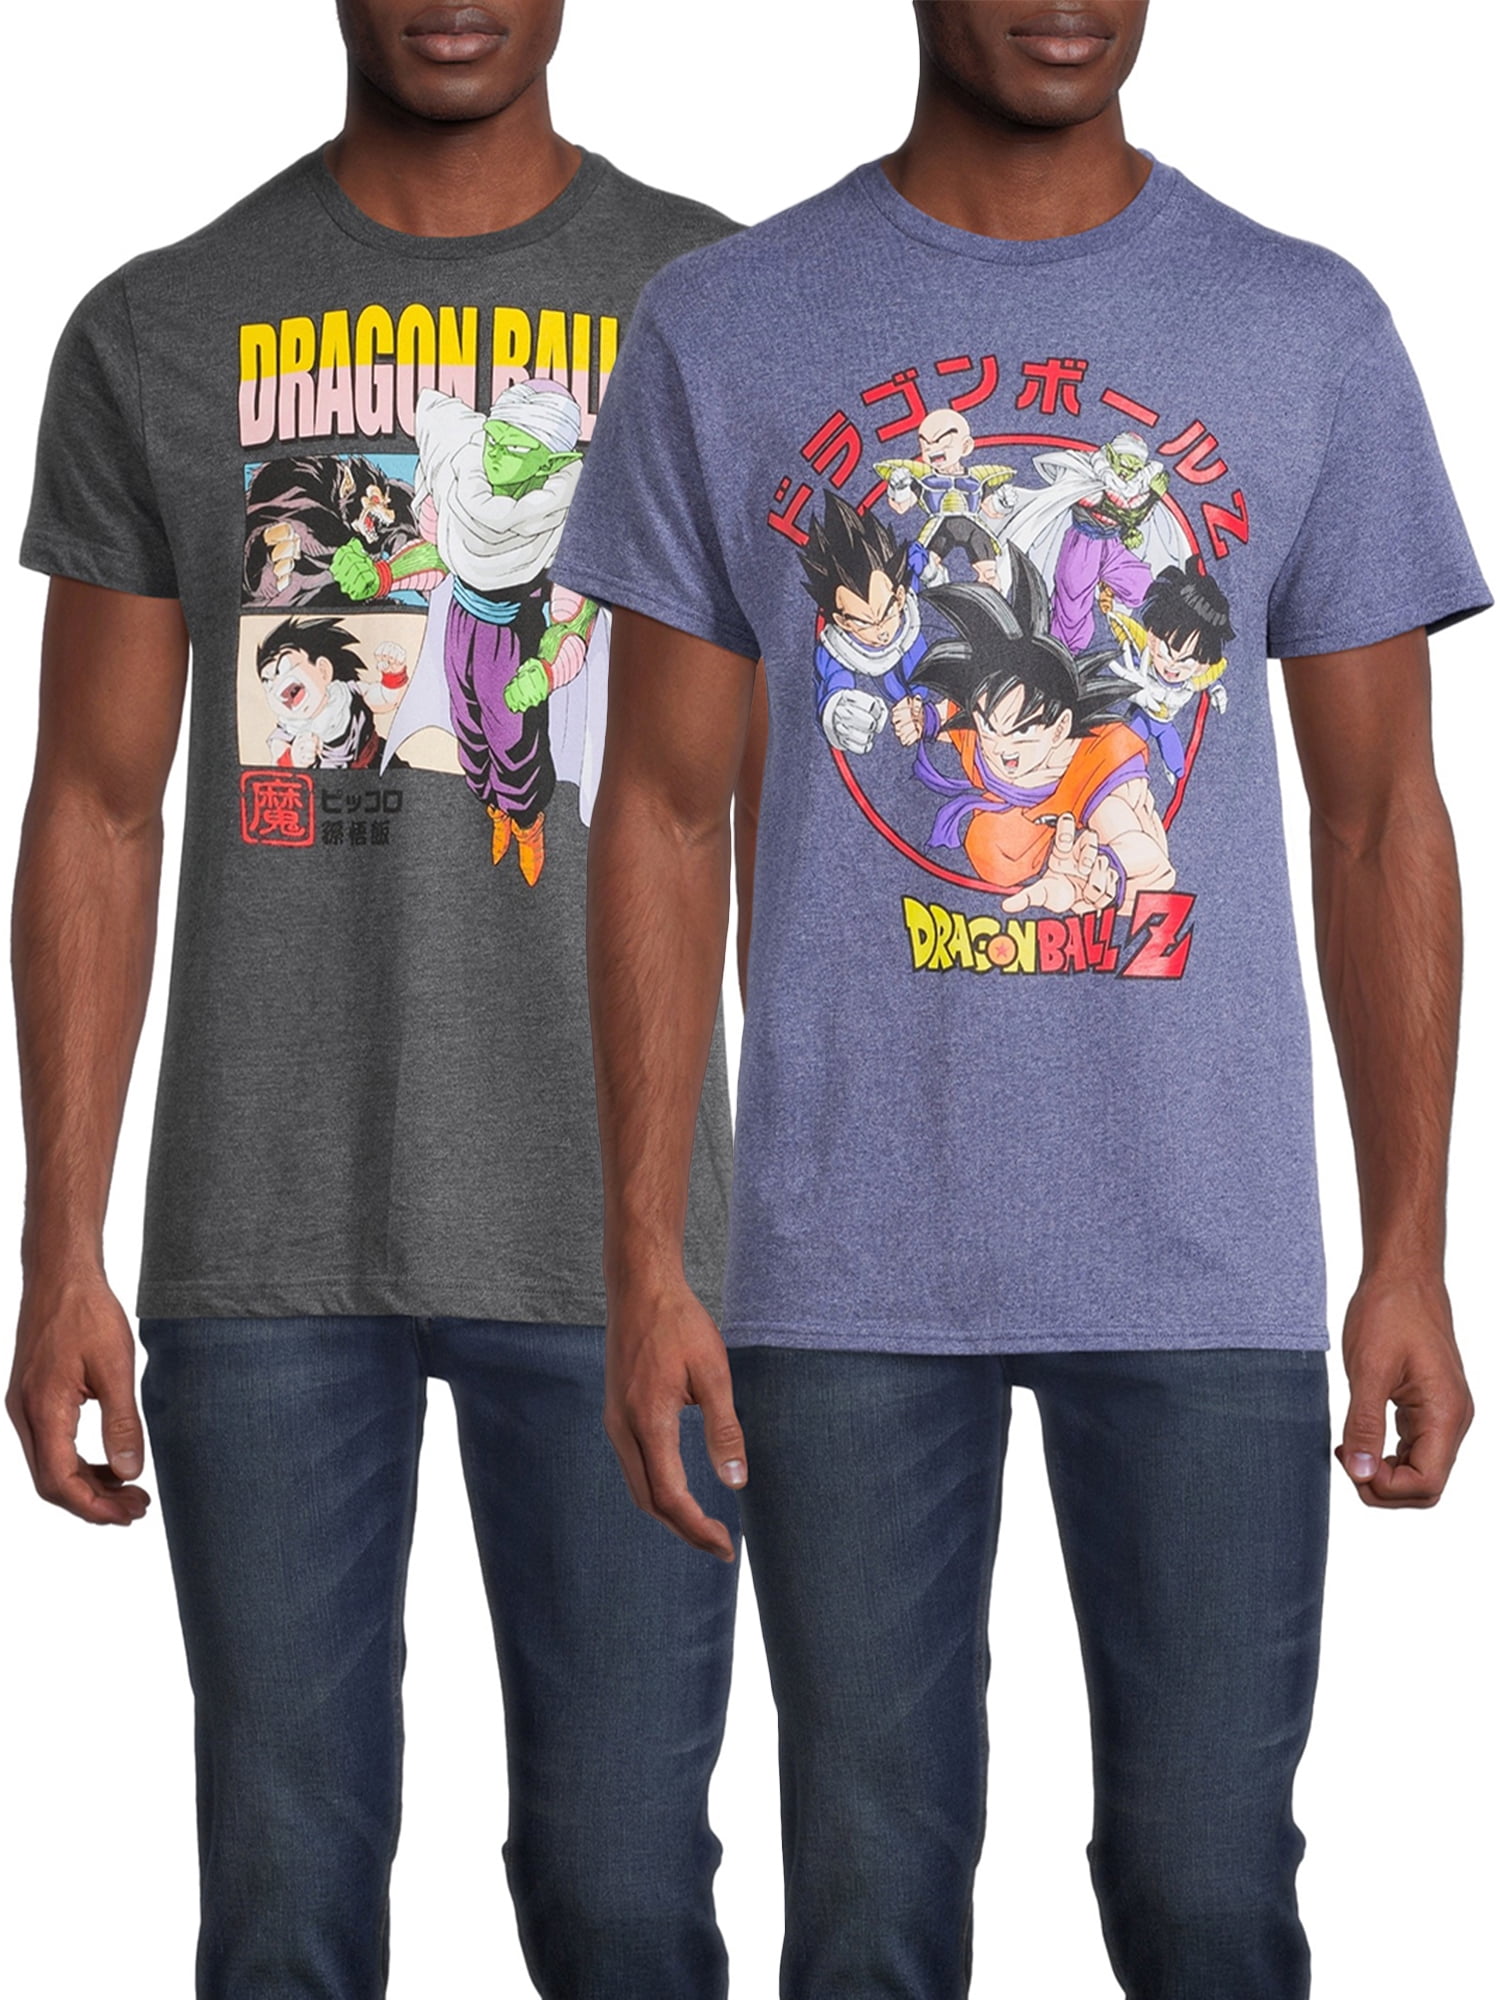 Dragon Ball Z Men's Short Sleeve Anime Graphic Tees, 2-Pack, Sizes S-3XL